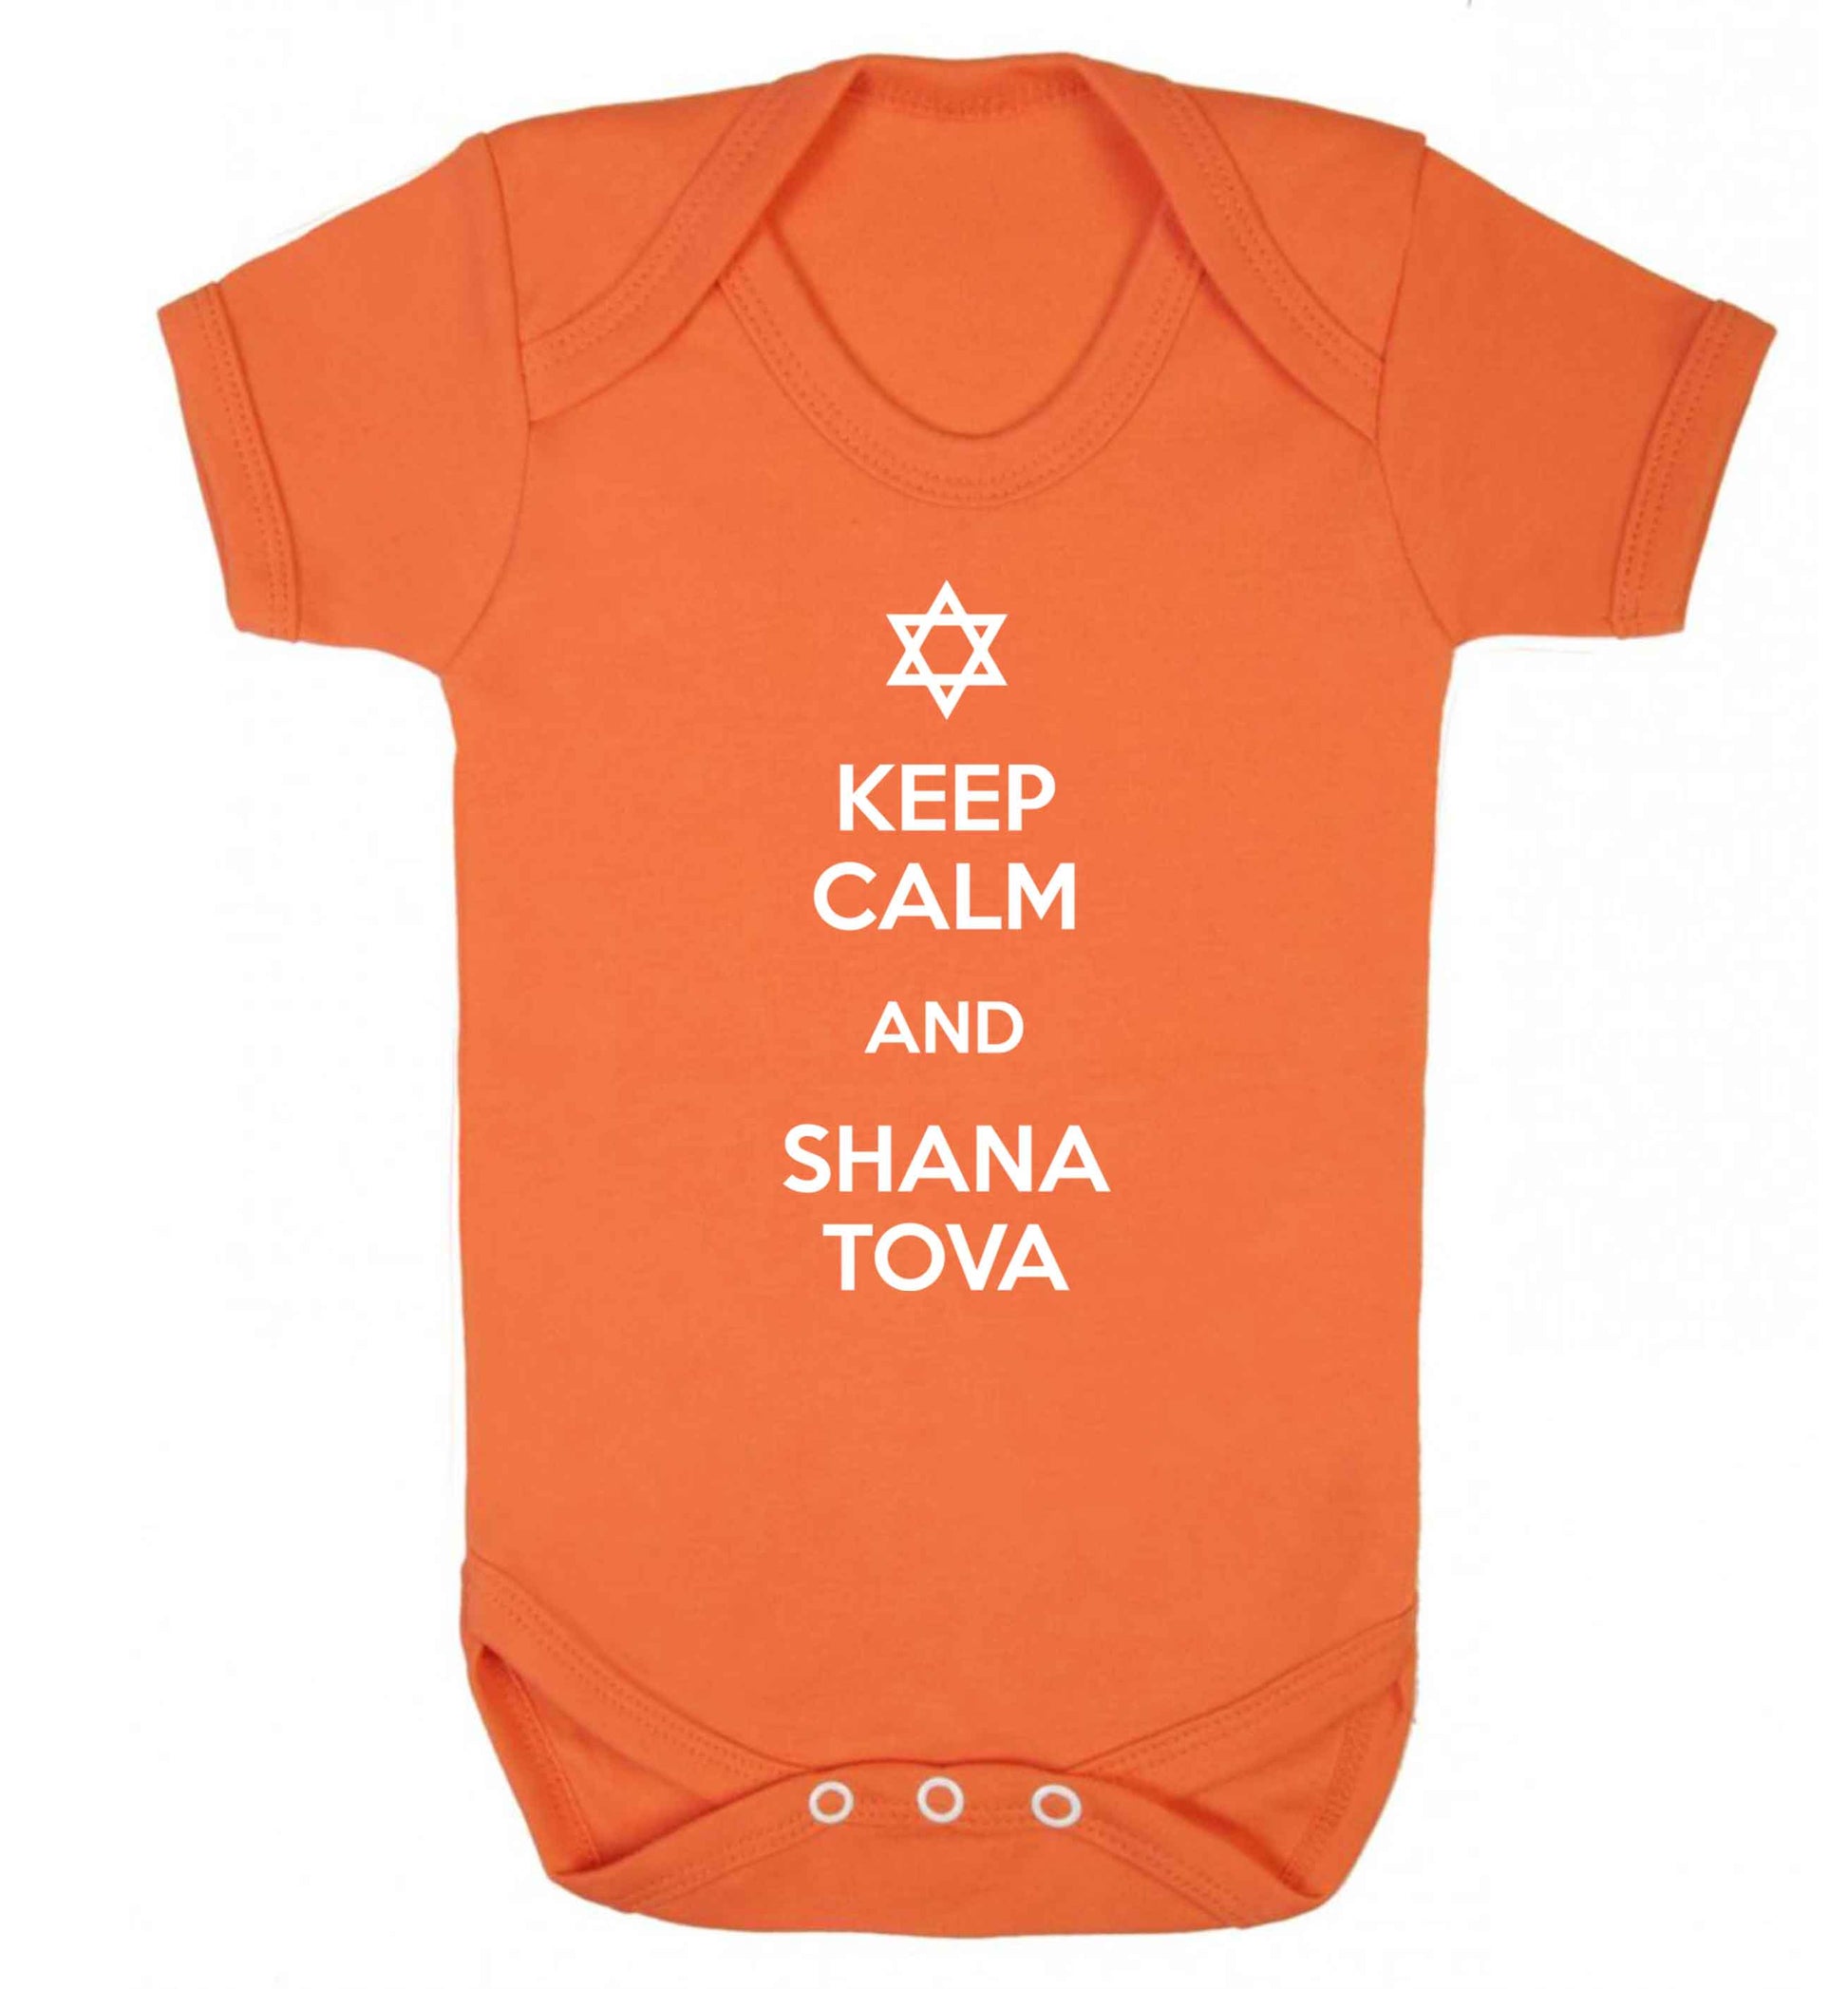 Keep calm and shana tova Baby Vest orange 18-24 months